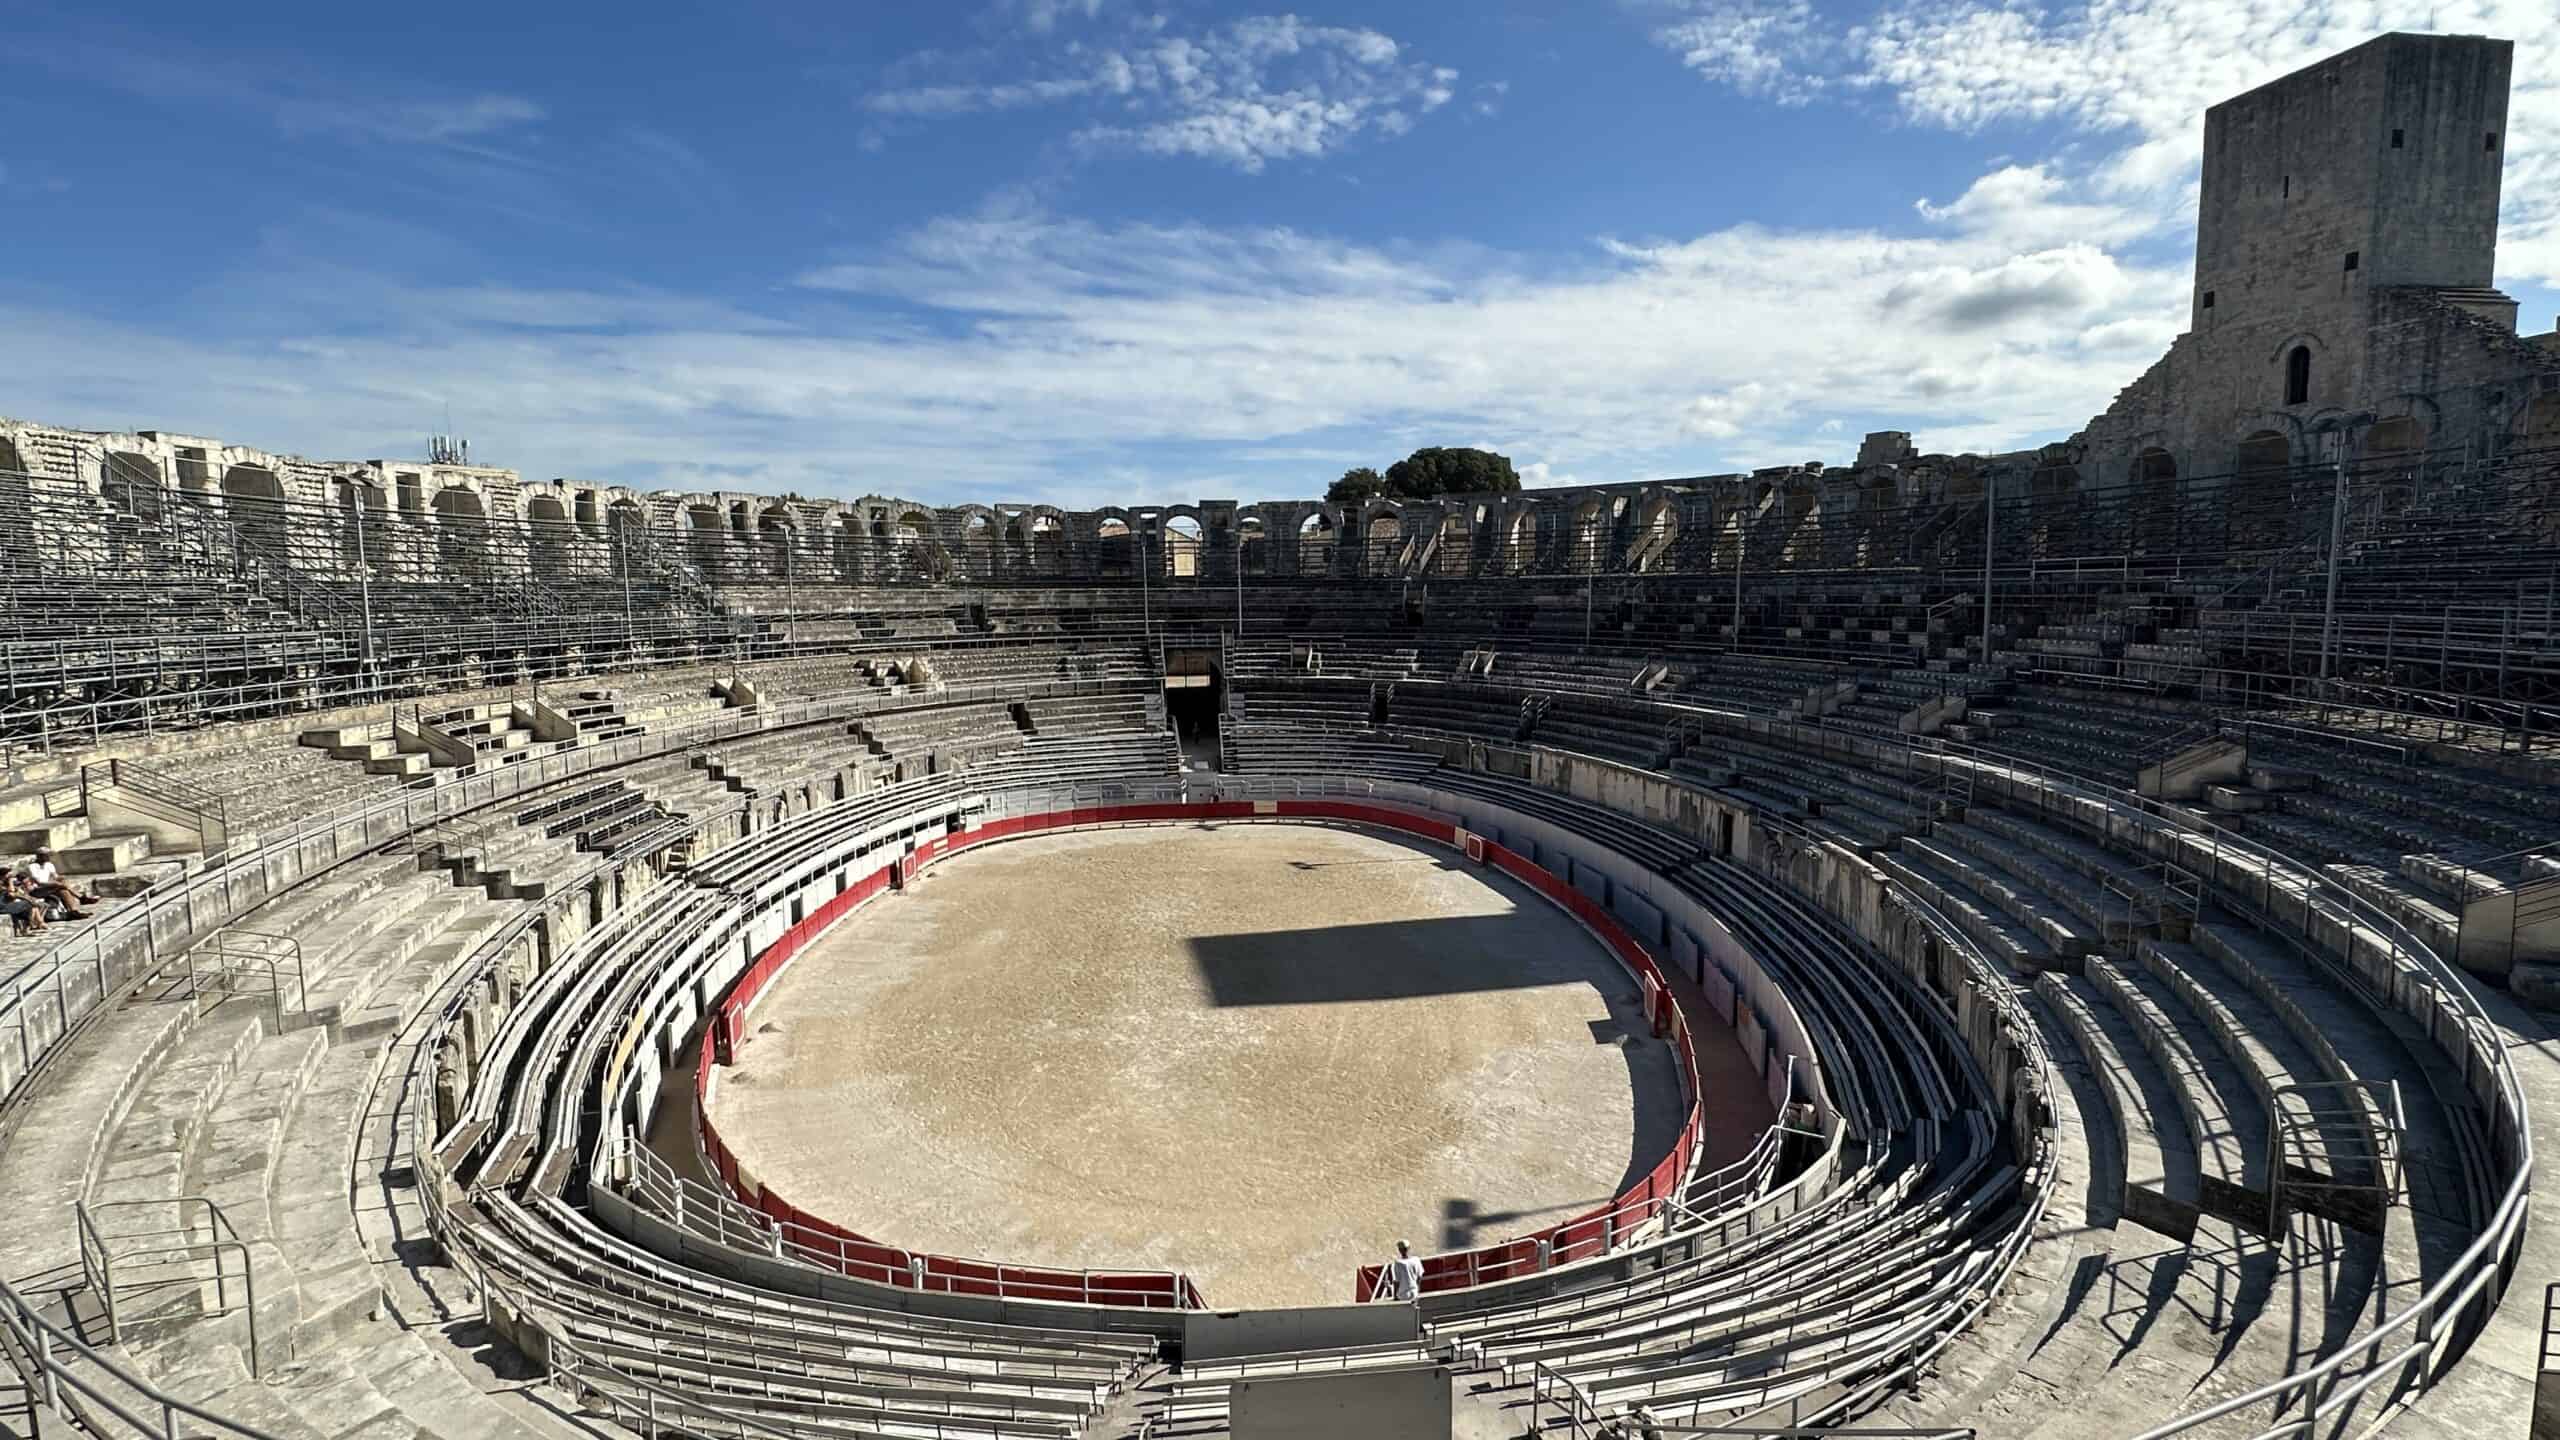 The Arles Amphitheatre